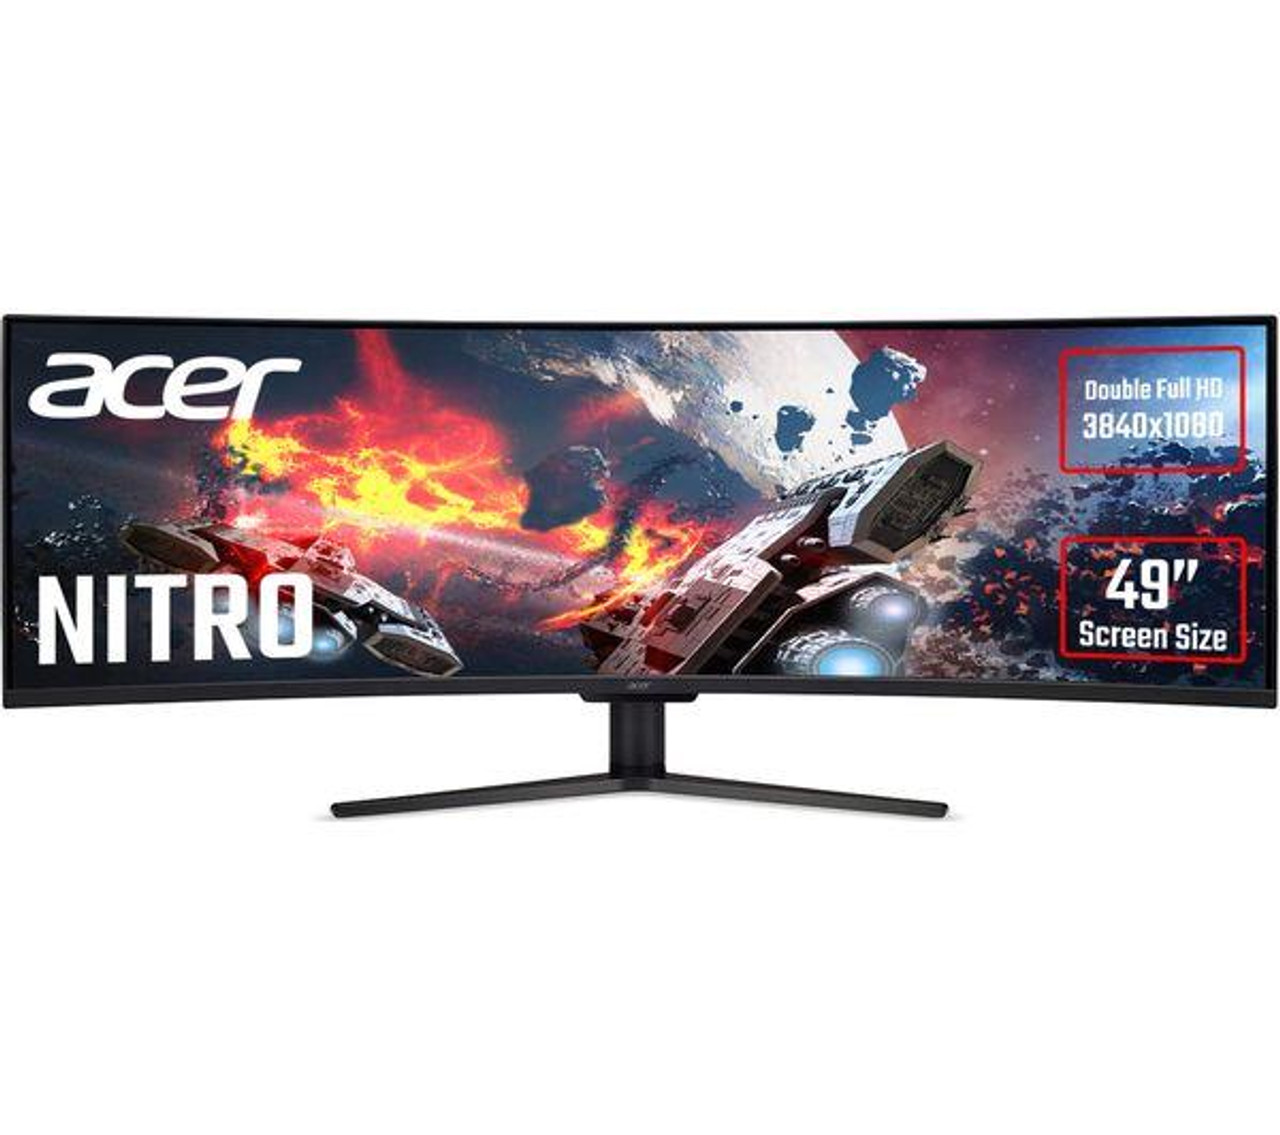 Acer Nitro EI491CRP 49 FHD 3840 x 1080p 144Hz Curved LCD Gaming Monitor  Black - TAB Retail